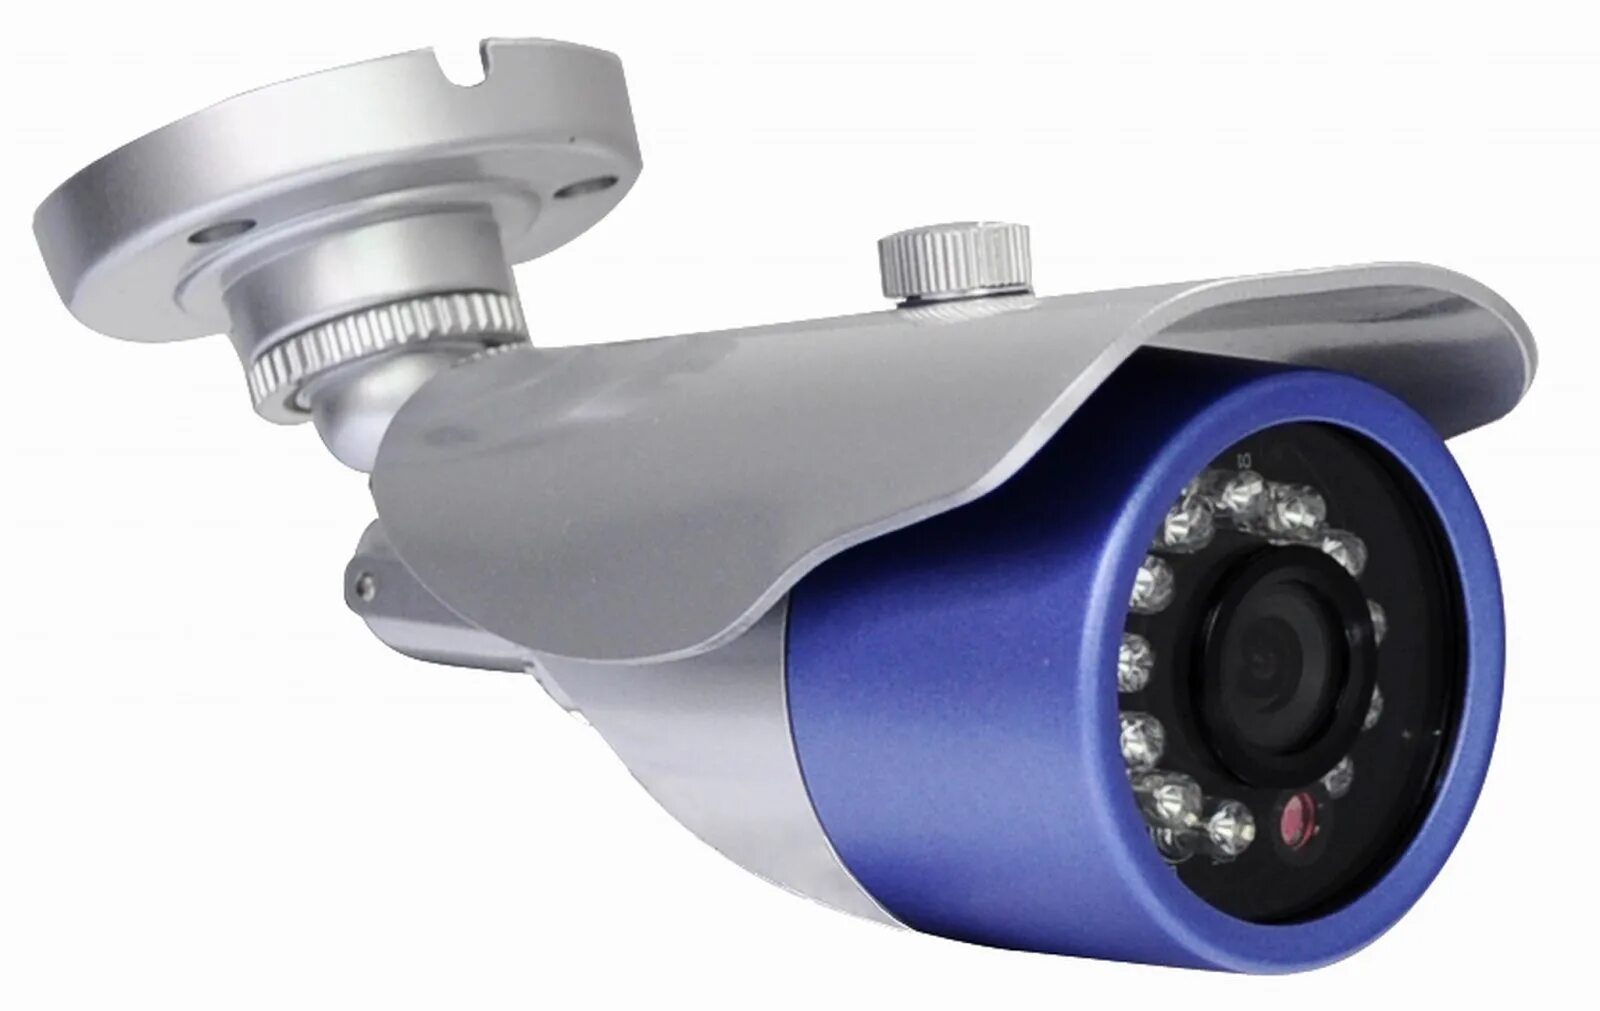 Камера наружного наблюдения Hikvision. NST-ipx3925 камера видеонаблюдения. Камера наблюдения Iris DF-242sh. CCTV камера 3д.